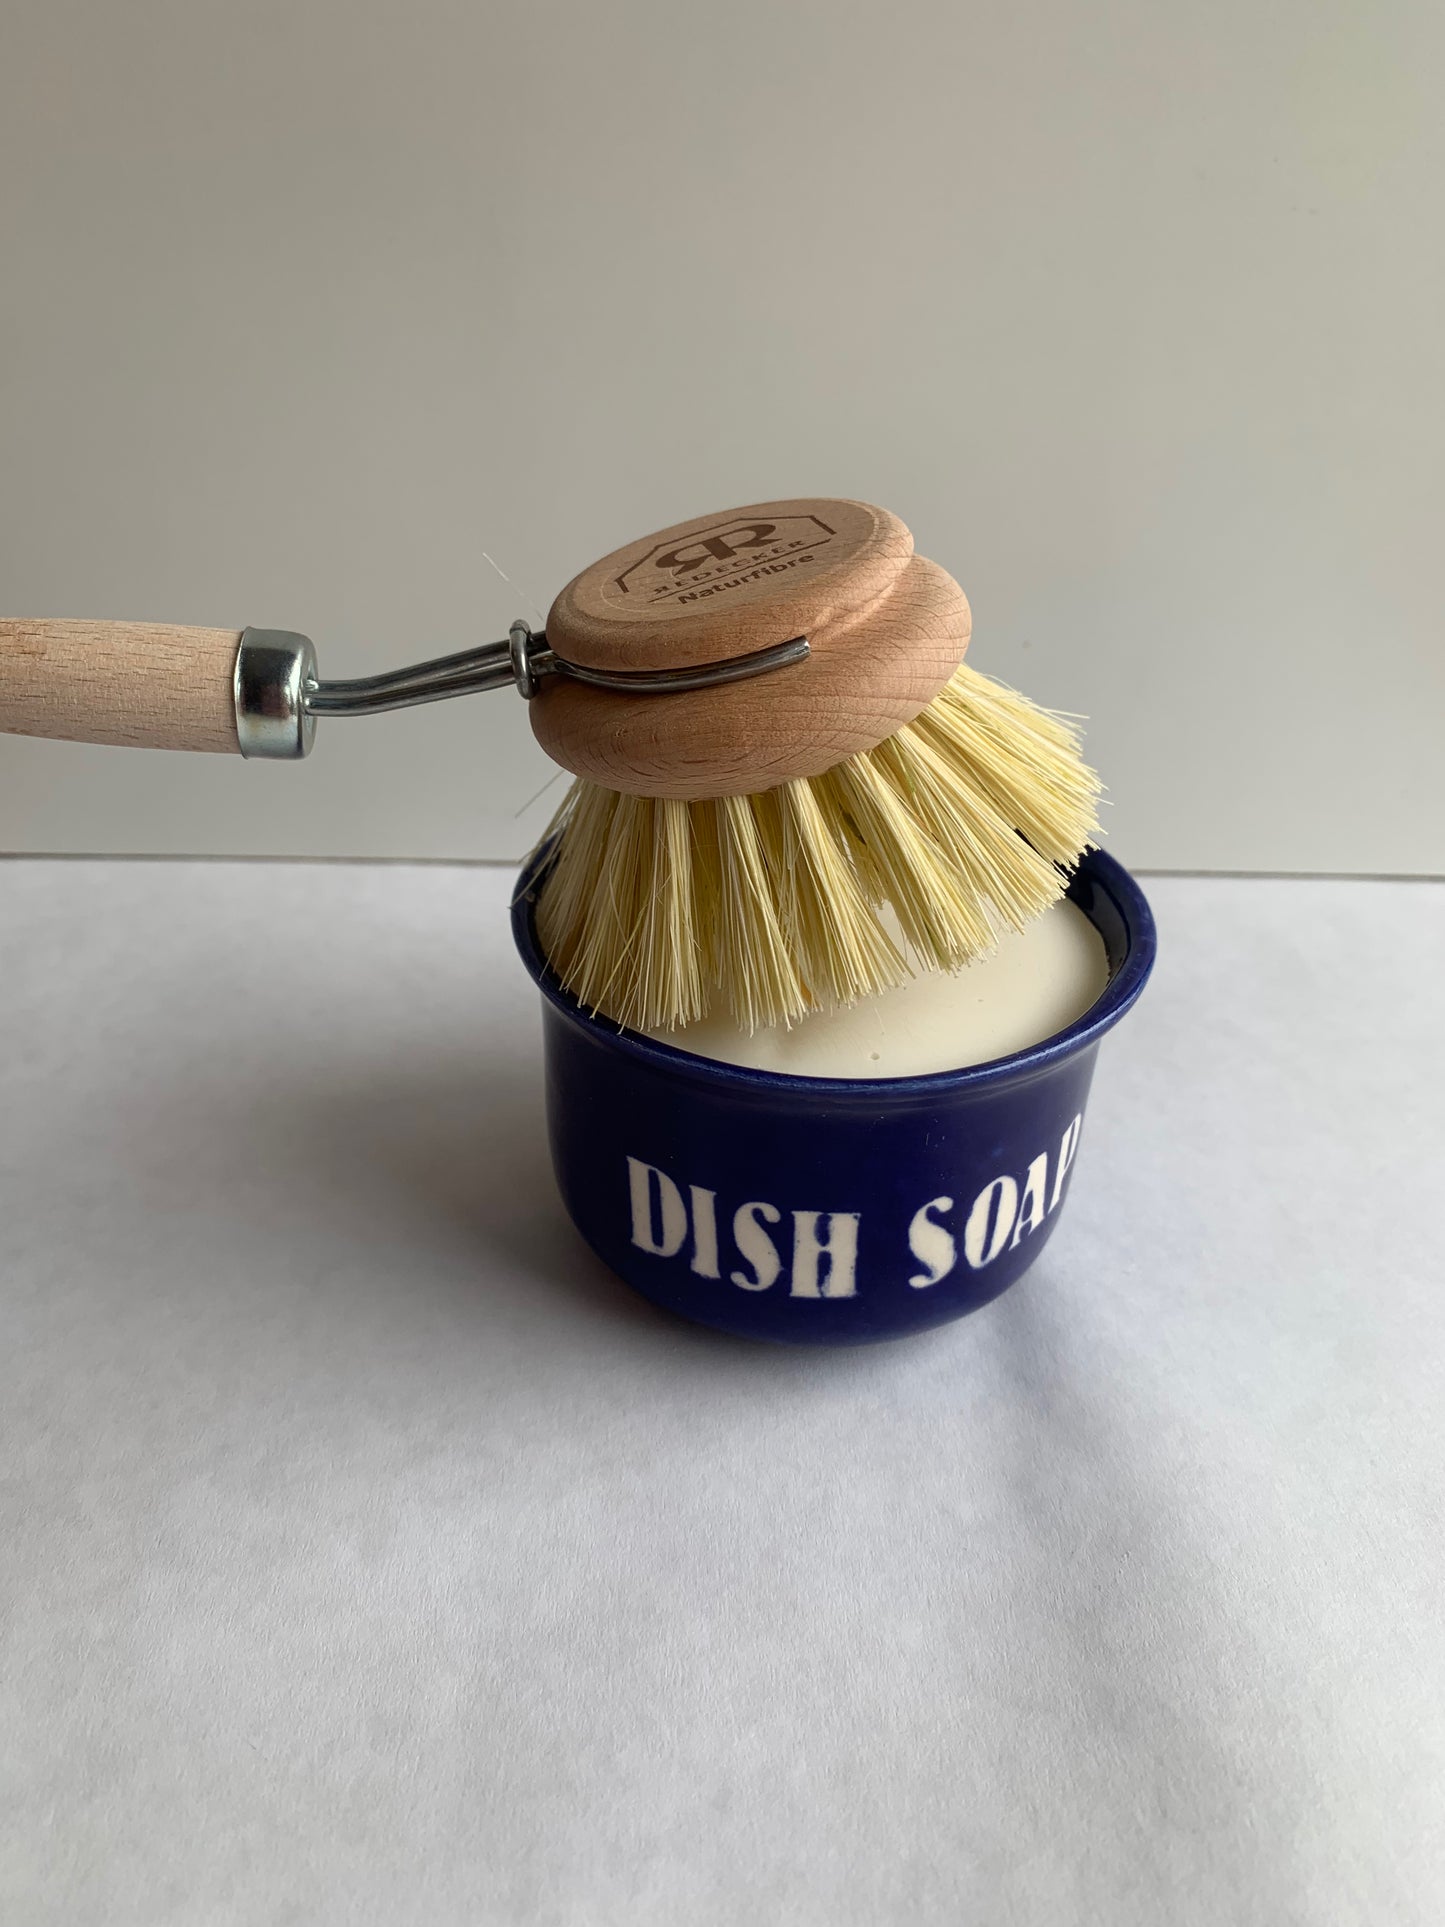 Dish Soap Ramekin - Deep Blue Glaze with Stencil